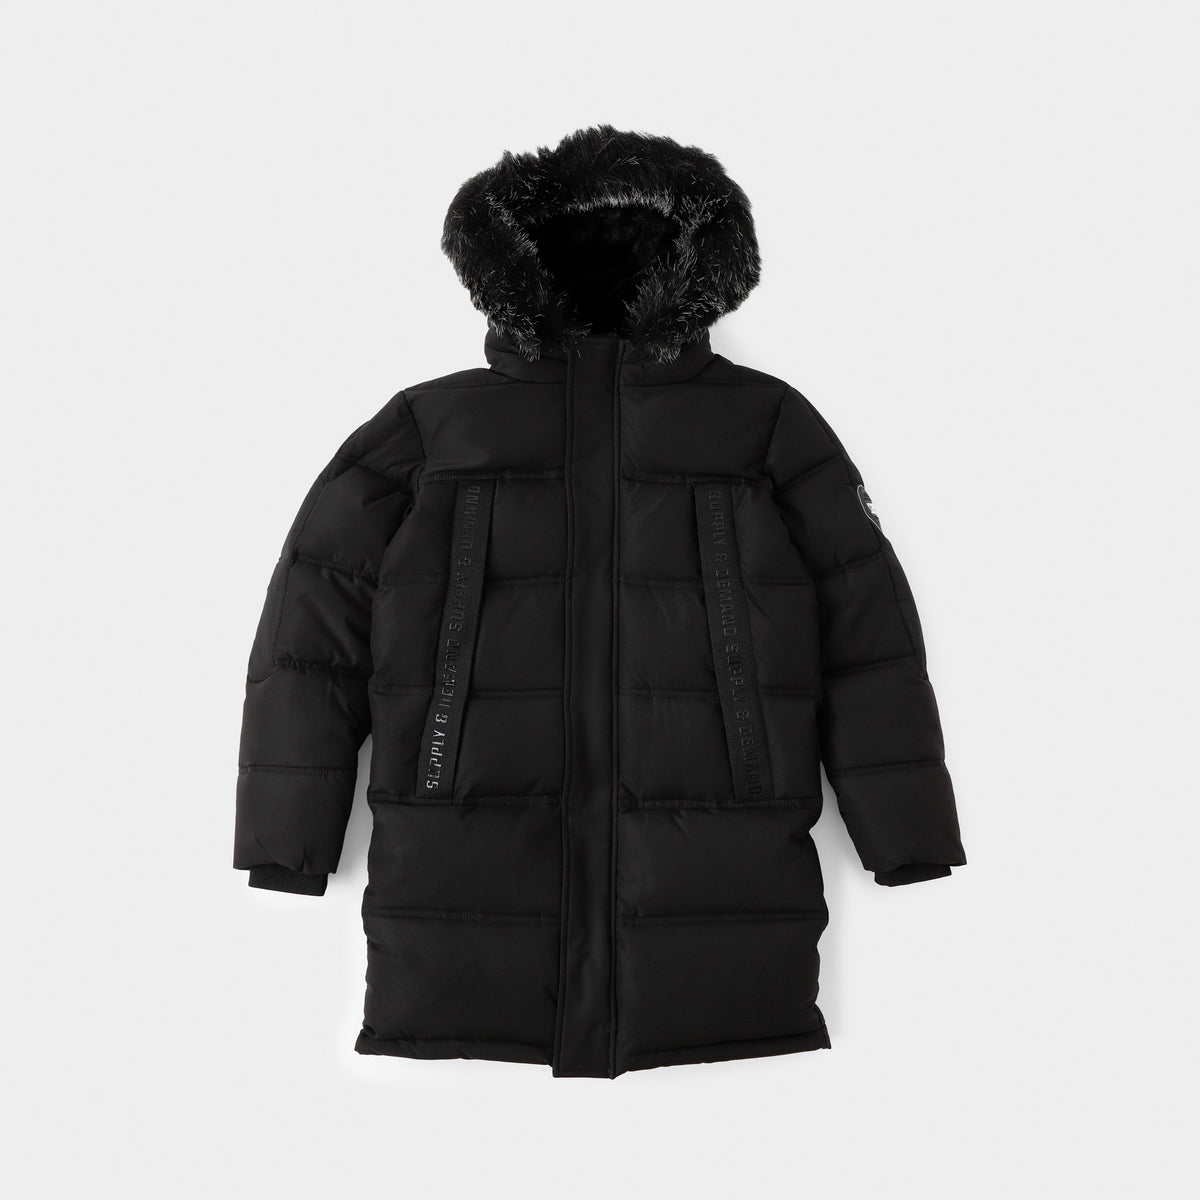 Hollister all weather hooded winter parka jacket in black